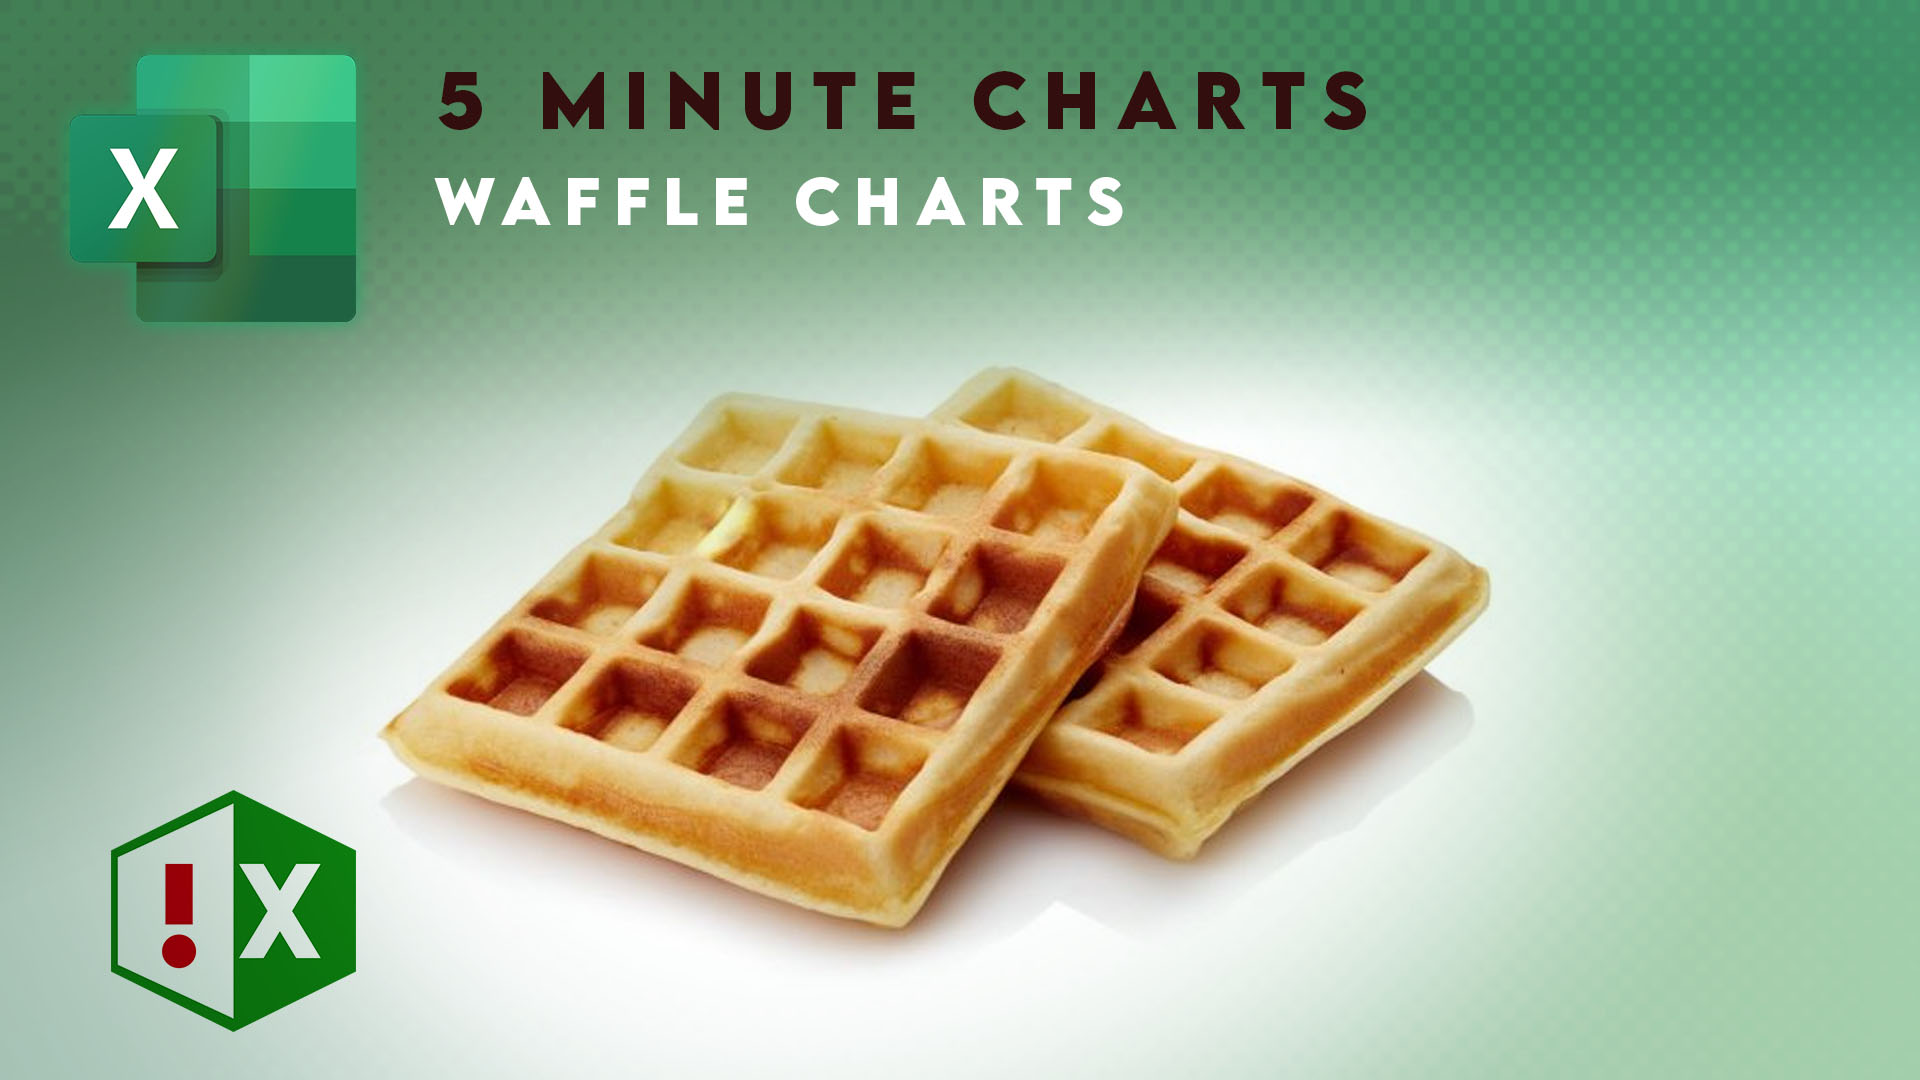 Video - Waffle Charts